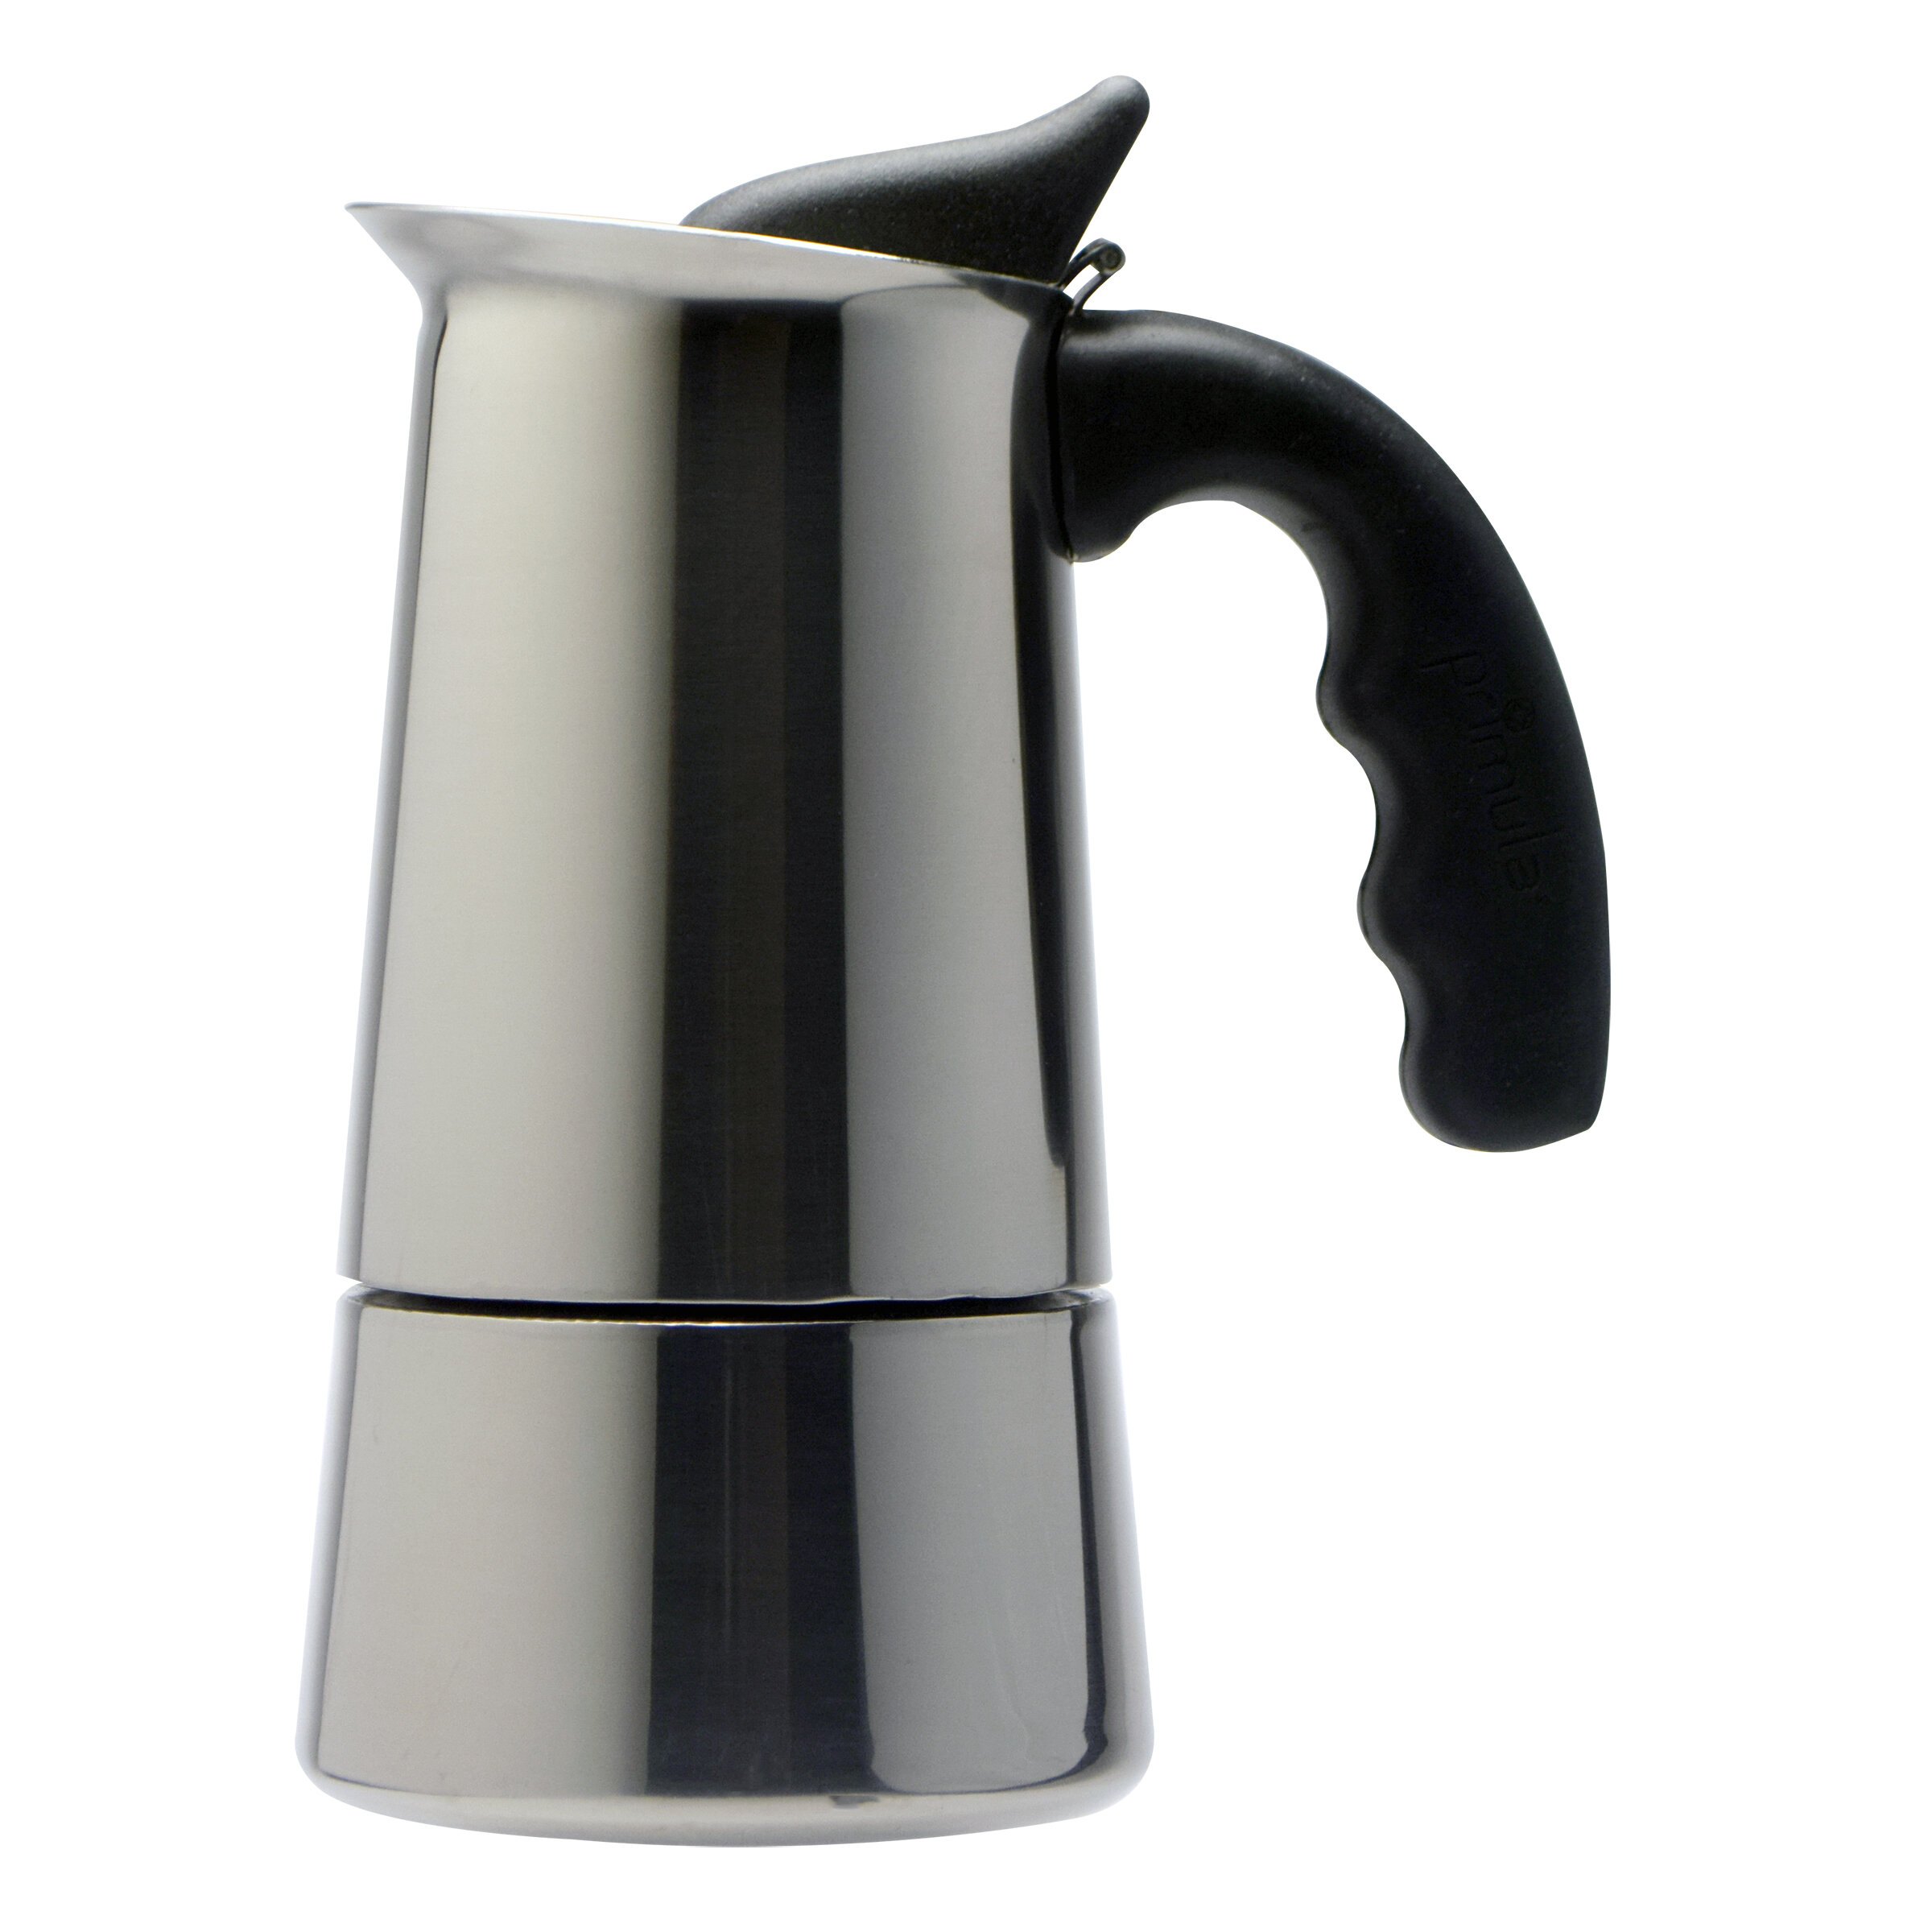 Percolator coffee pot